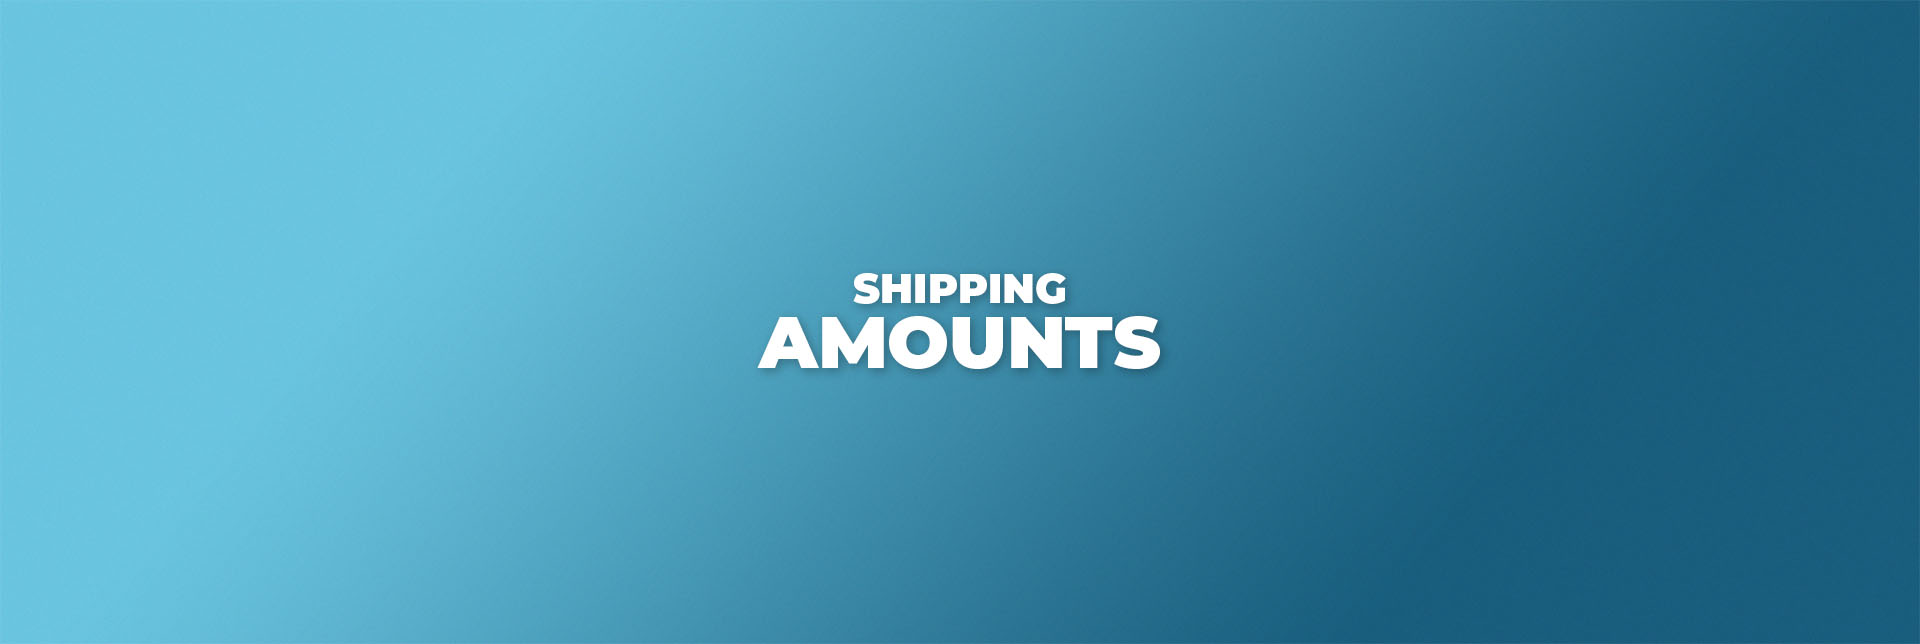 Shipping Amounts